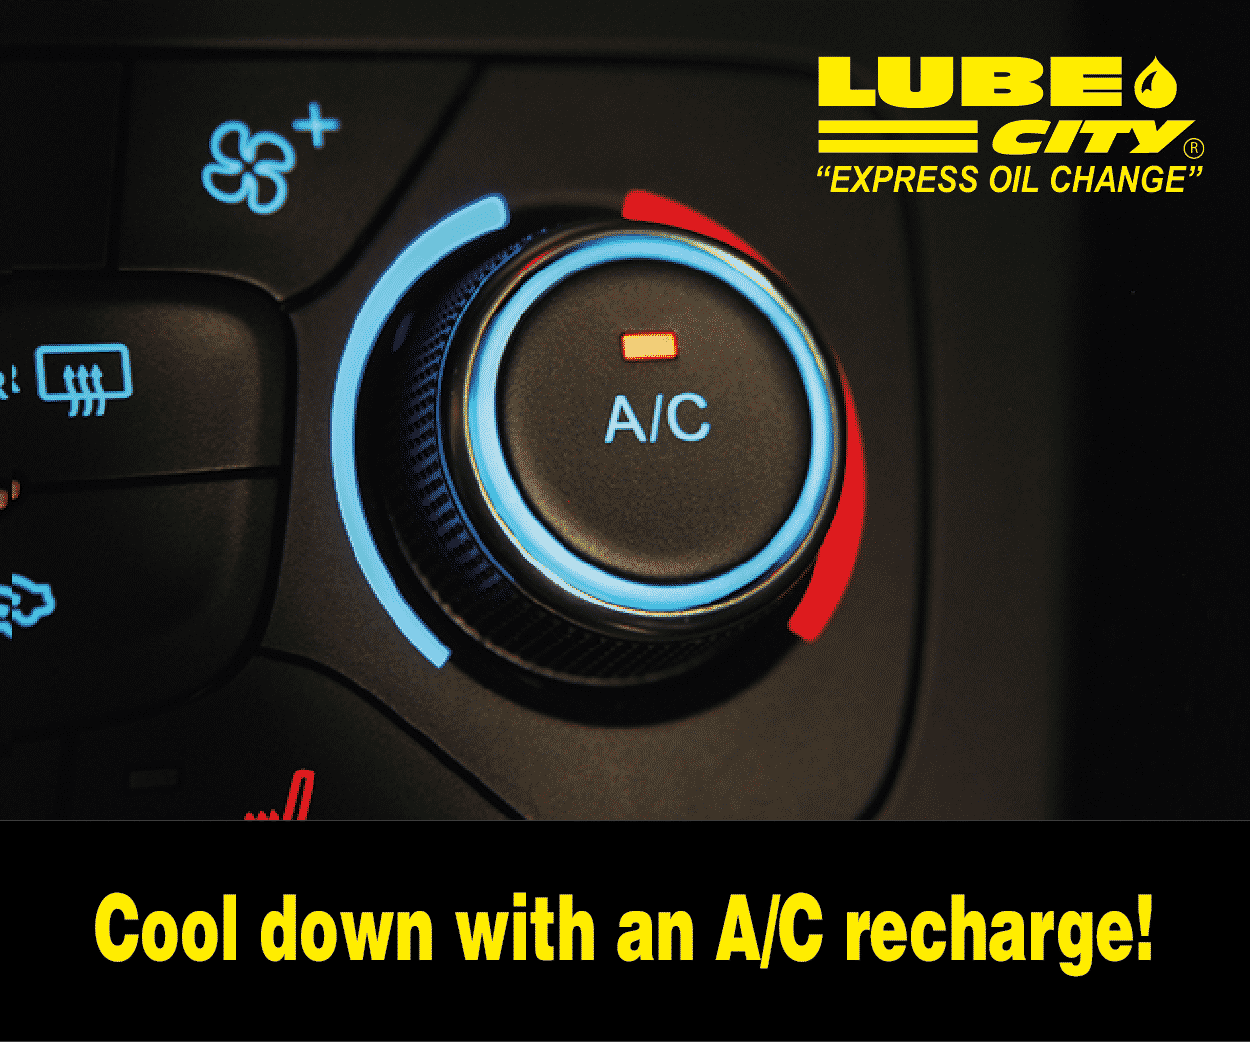 AC recharge